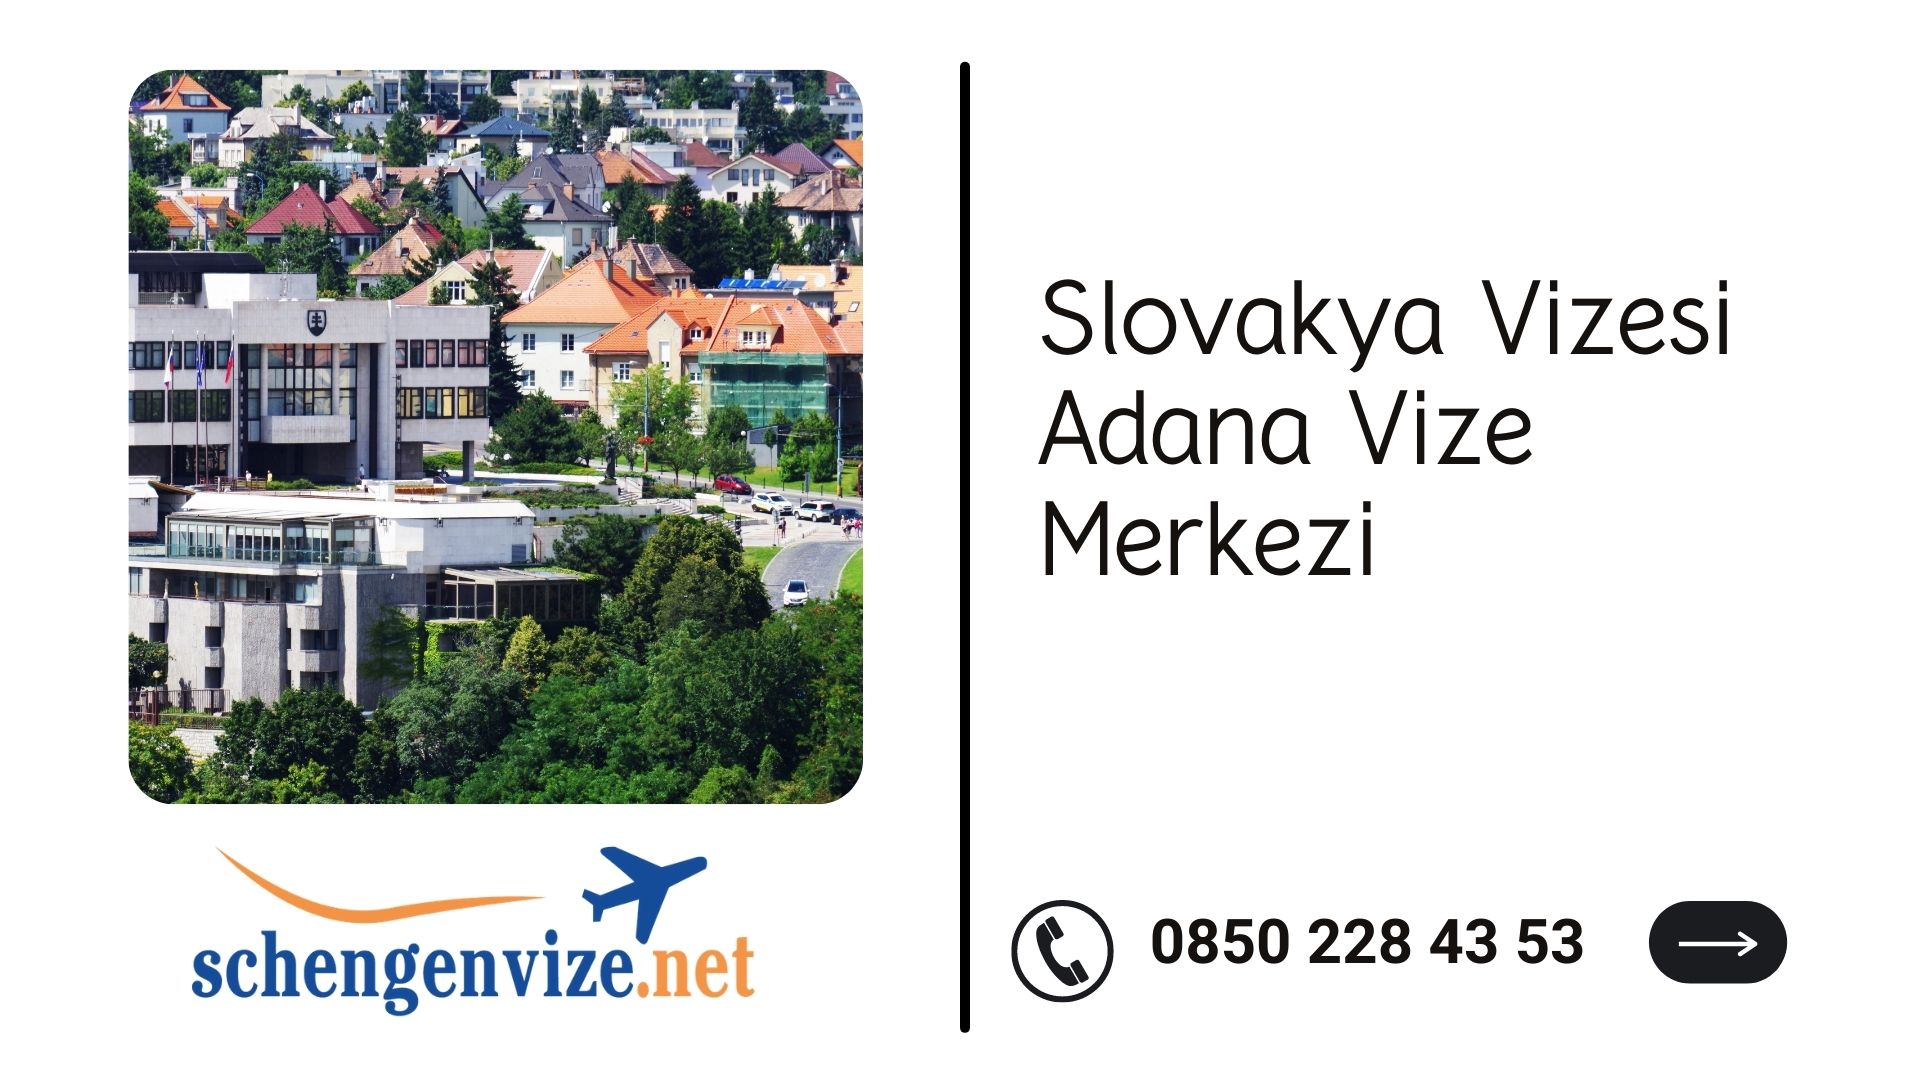 Slovakya Vizesi Adana Vize Merkezi